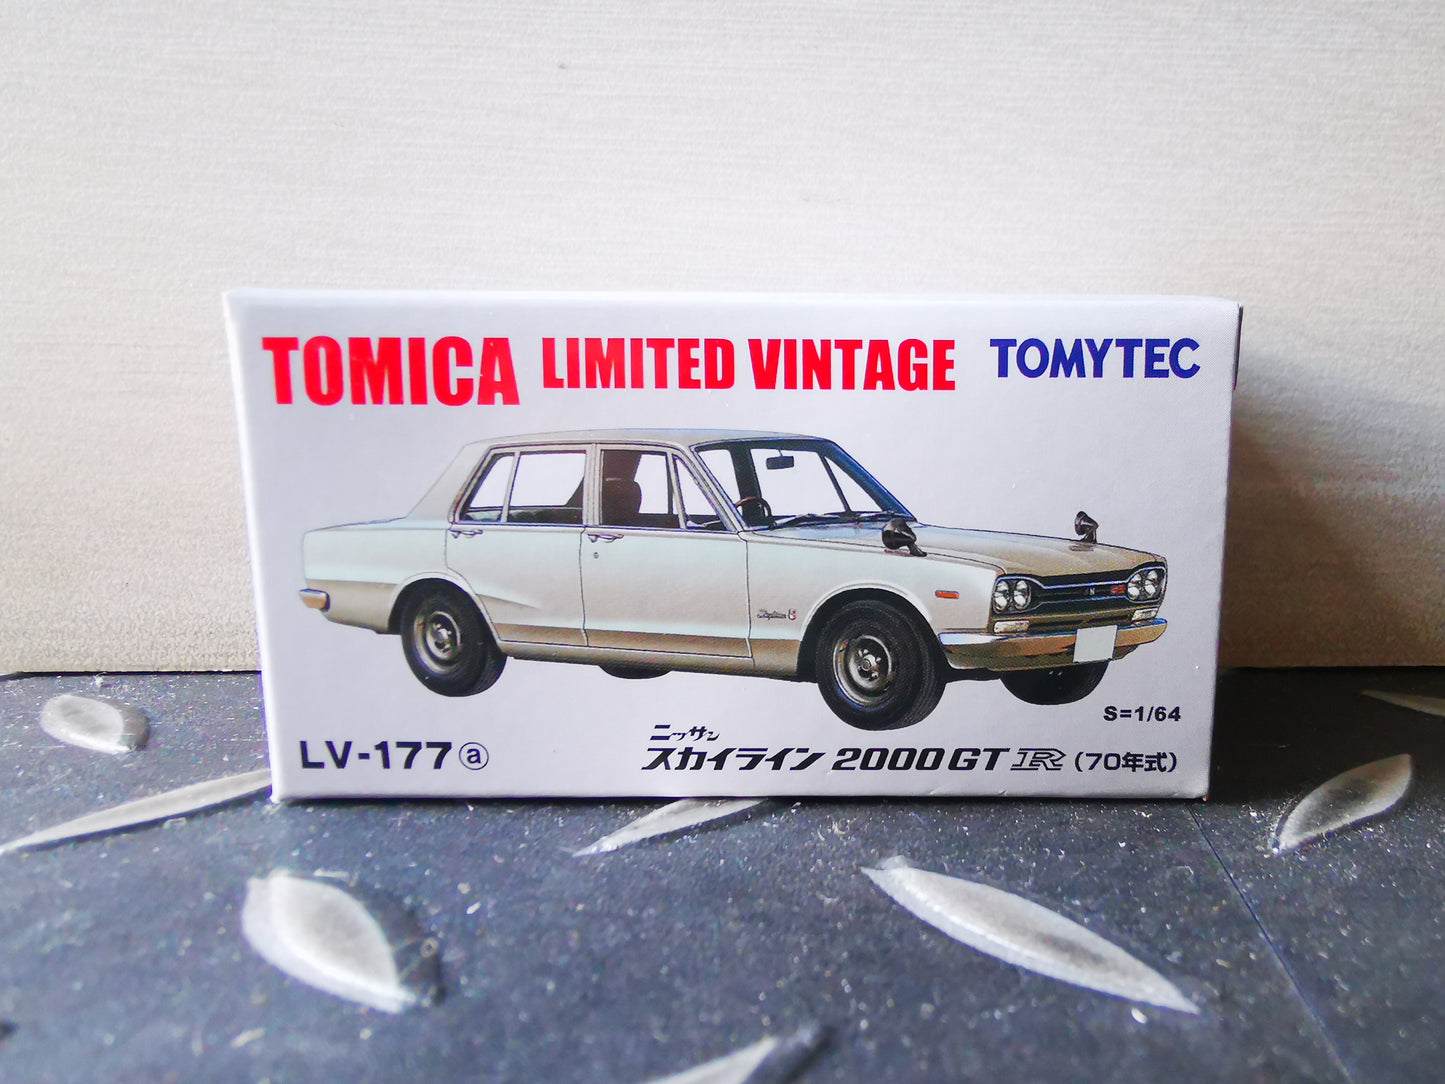 Tomica Limited Vintage LV-177a Skyline 2000GT-R 70's (silver) 1:64 SCALE Takara Tomy